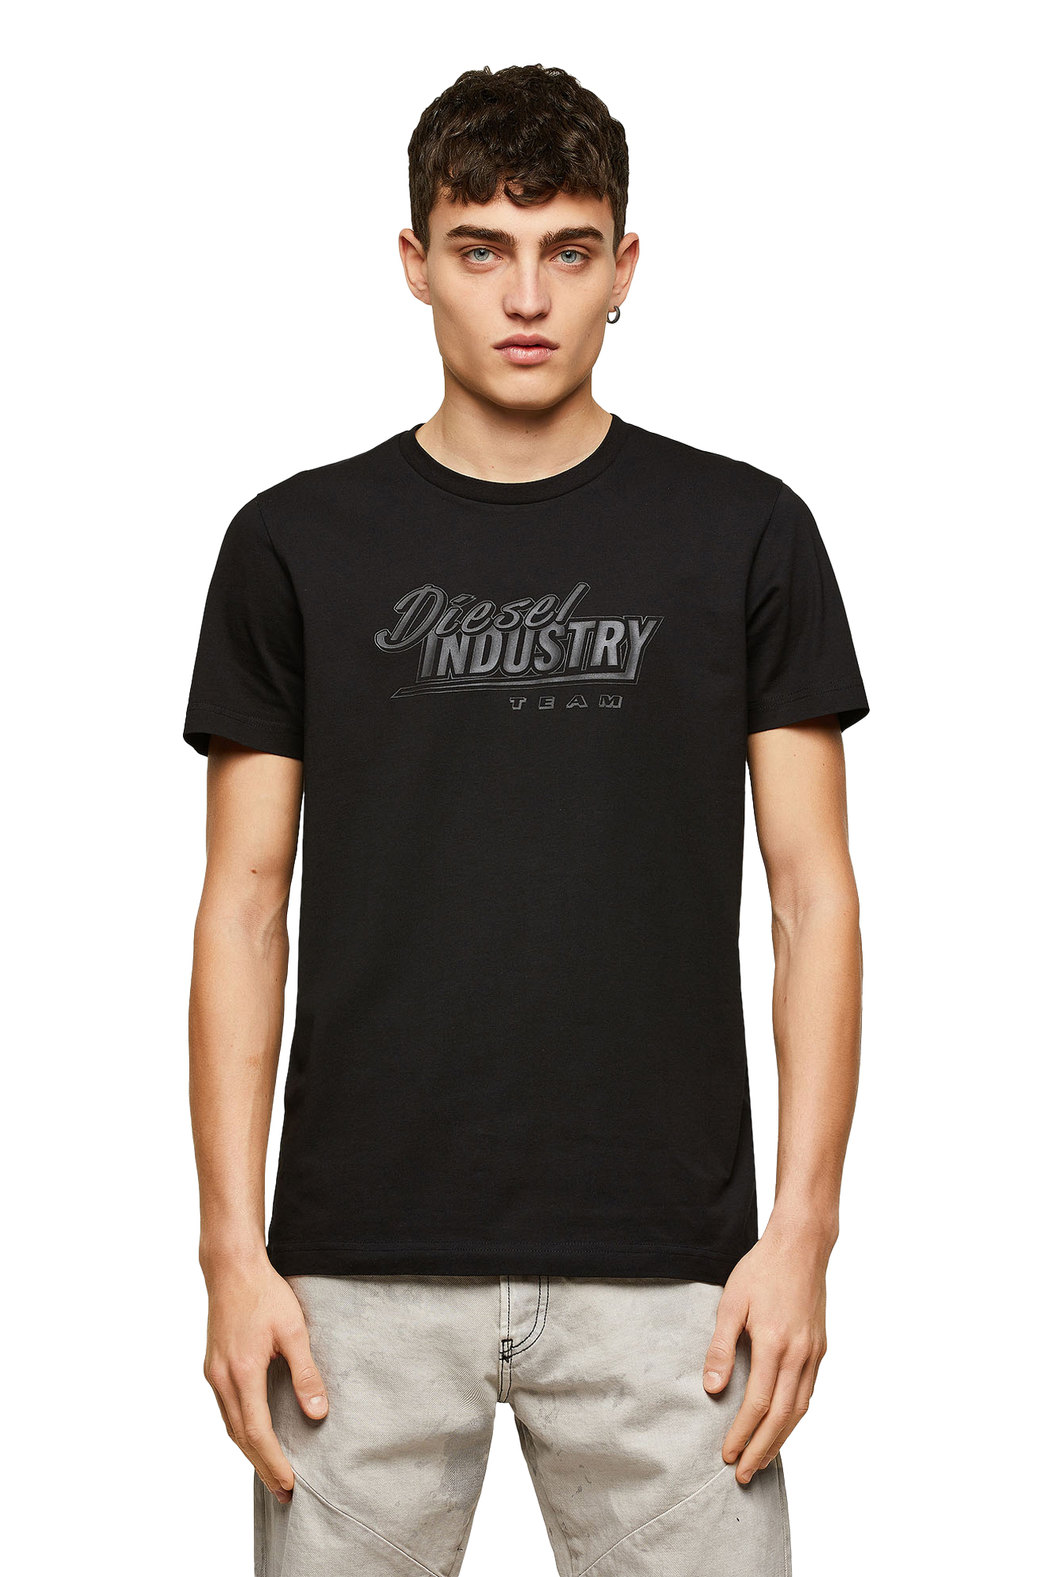 T-shirt with Diesel Industry Team print